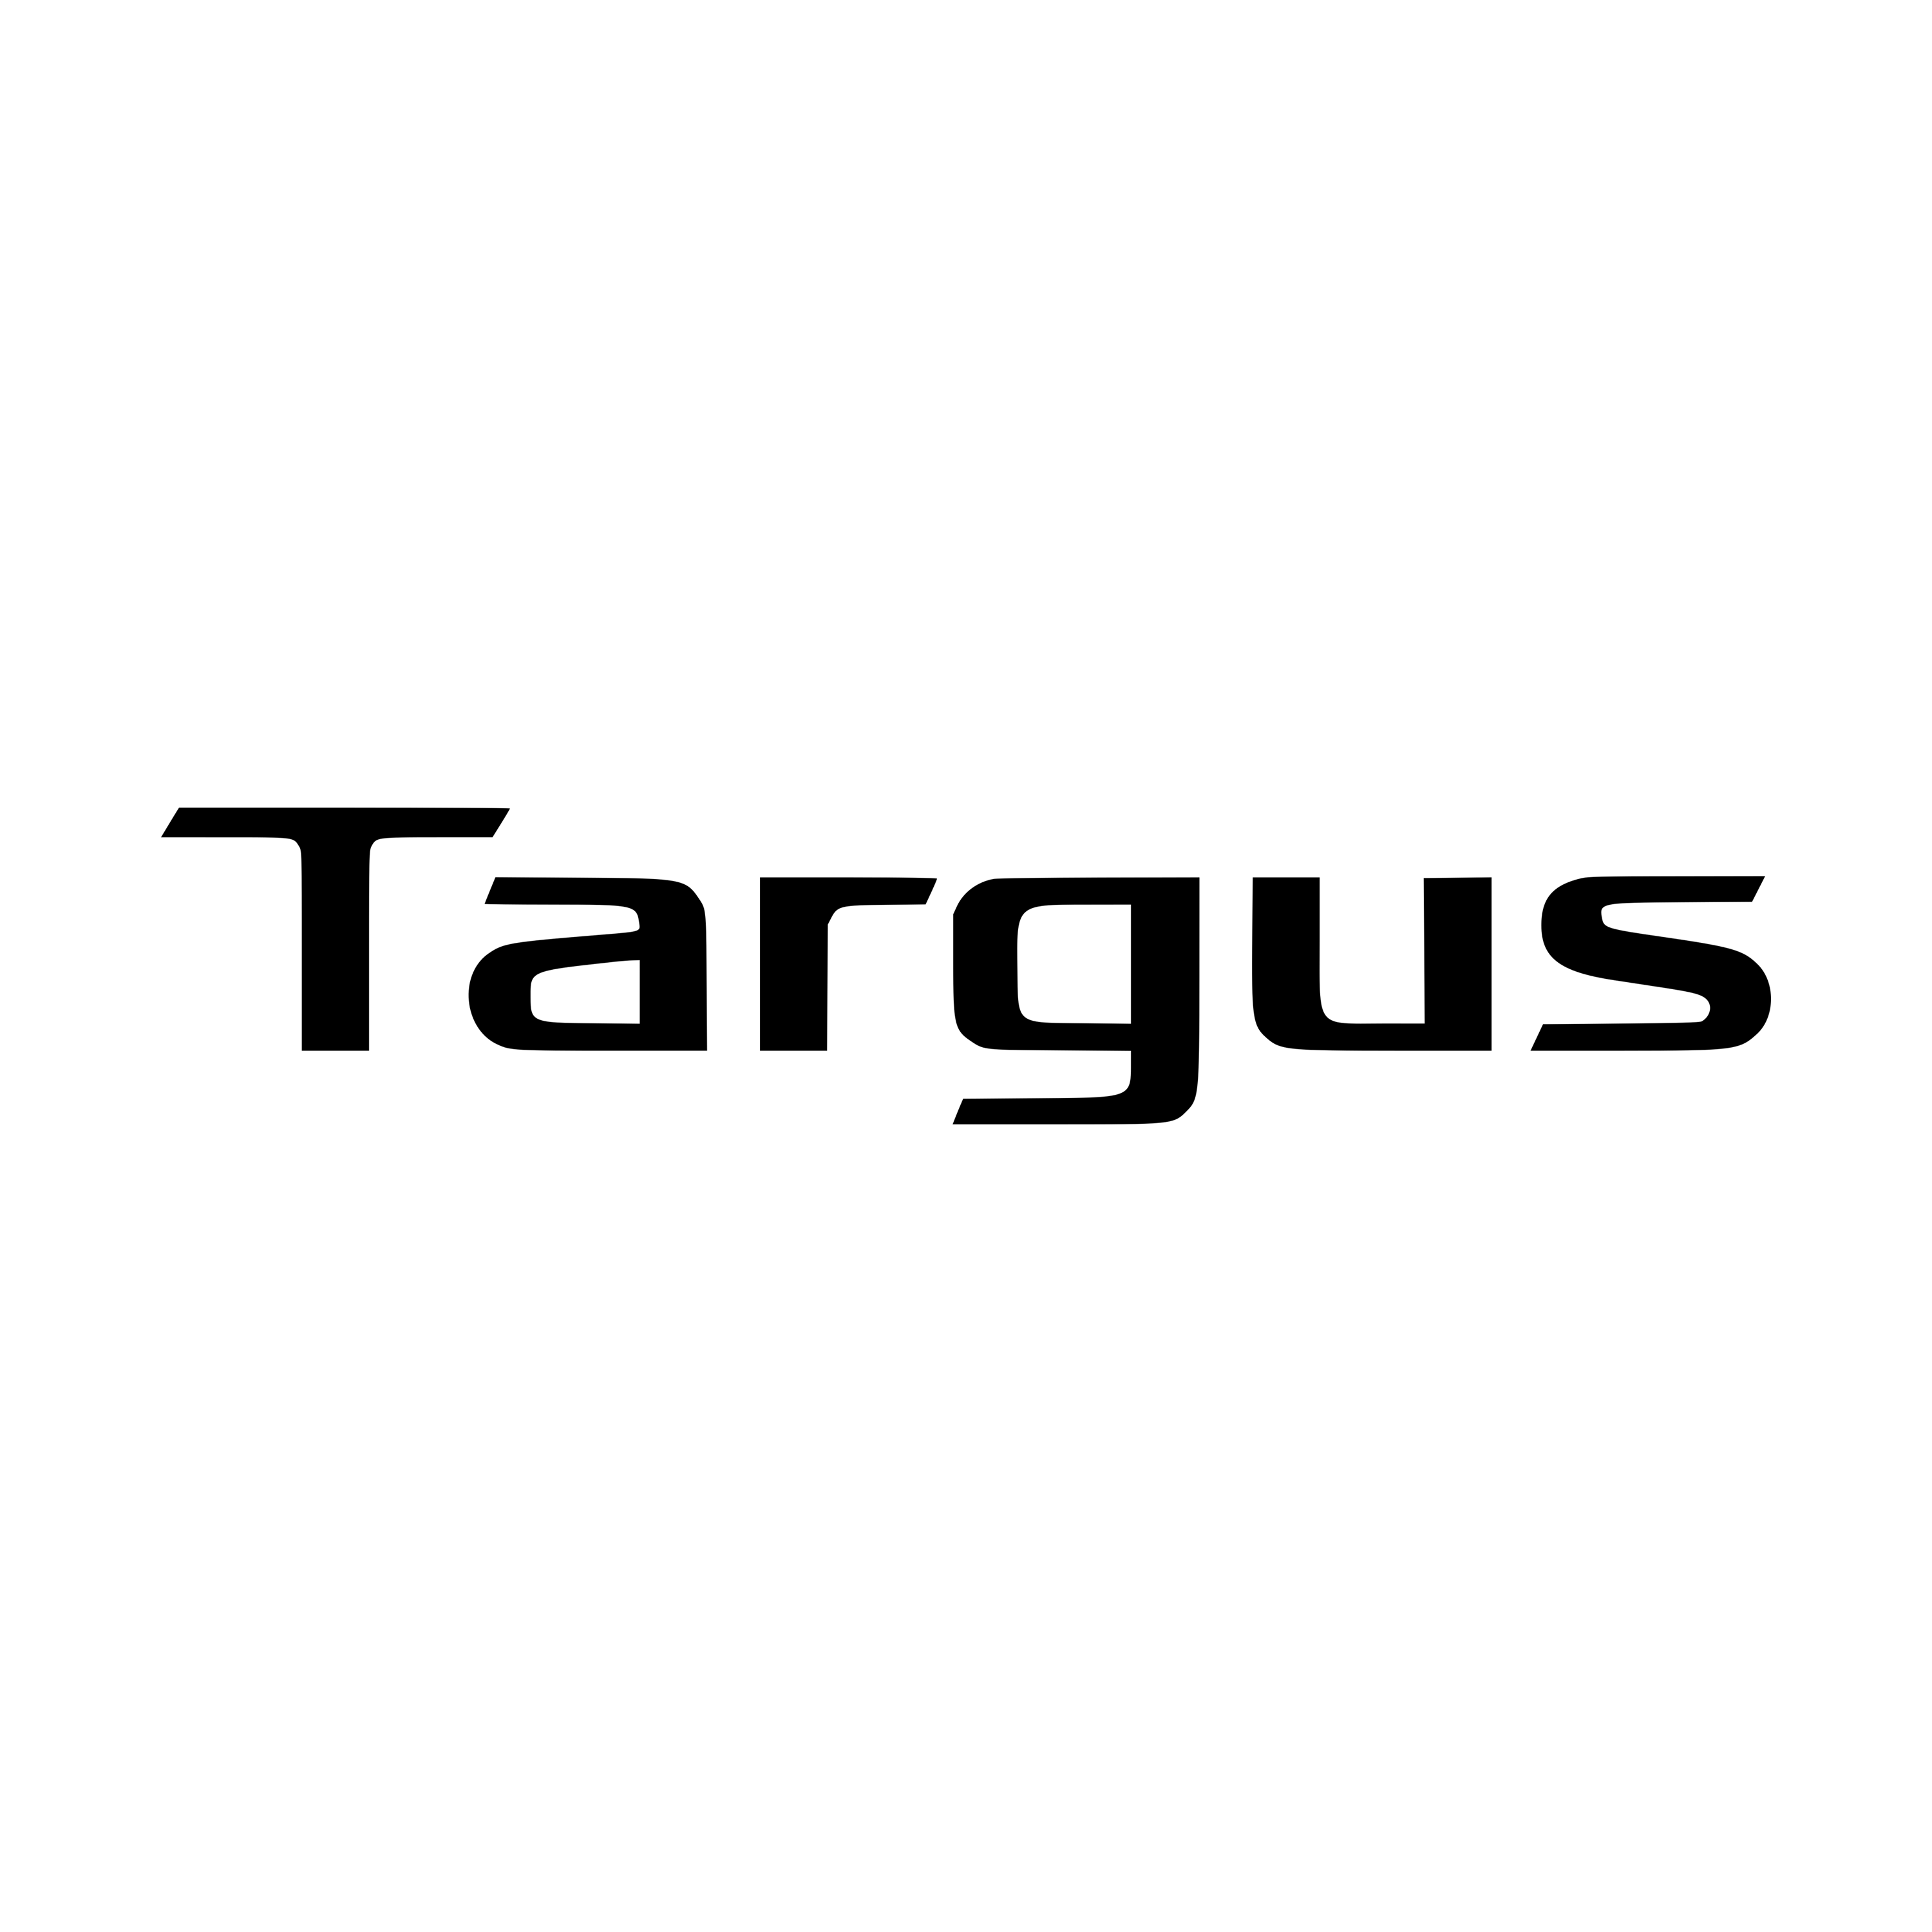 Targus Logo Transparent Photo